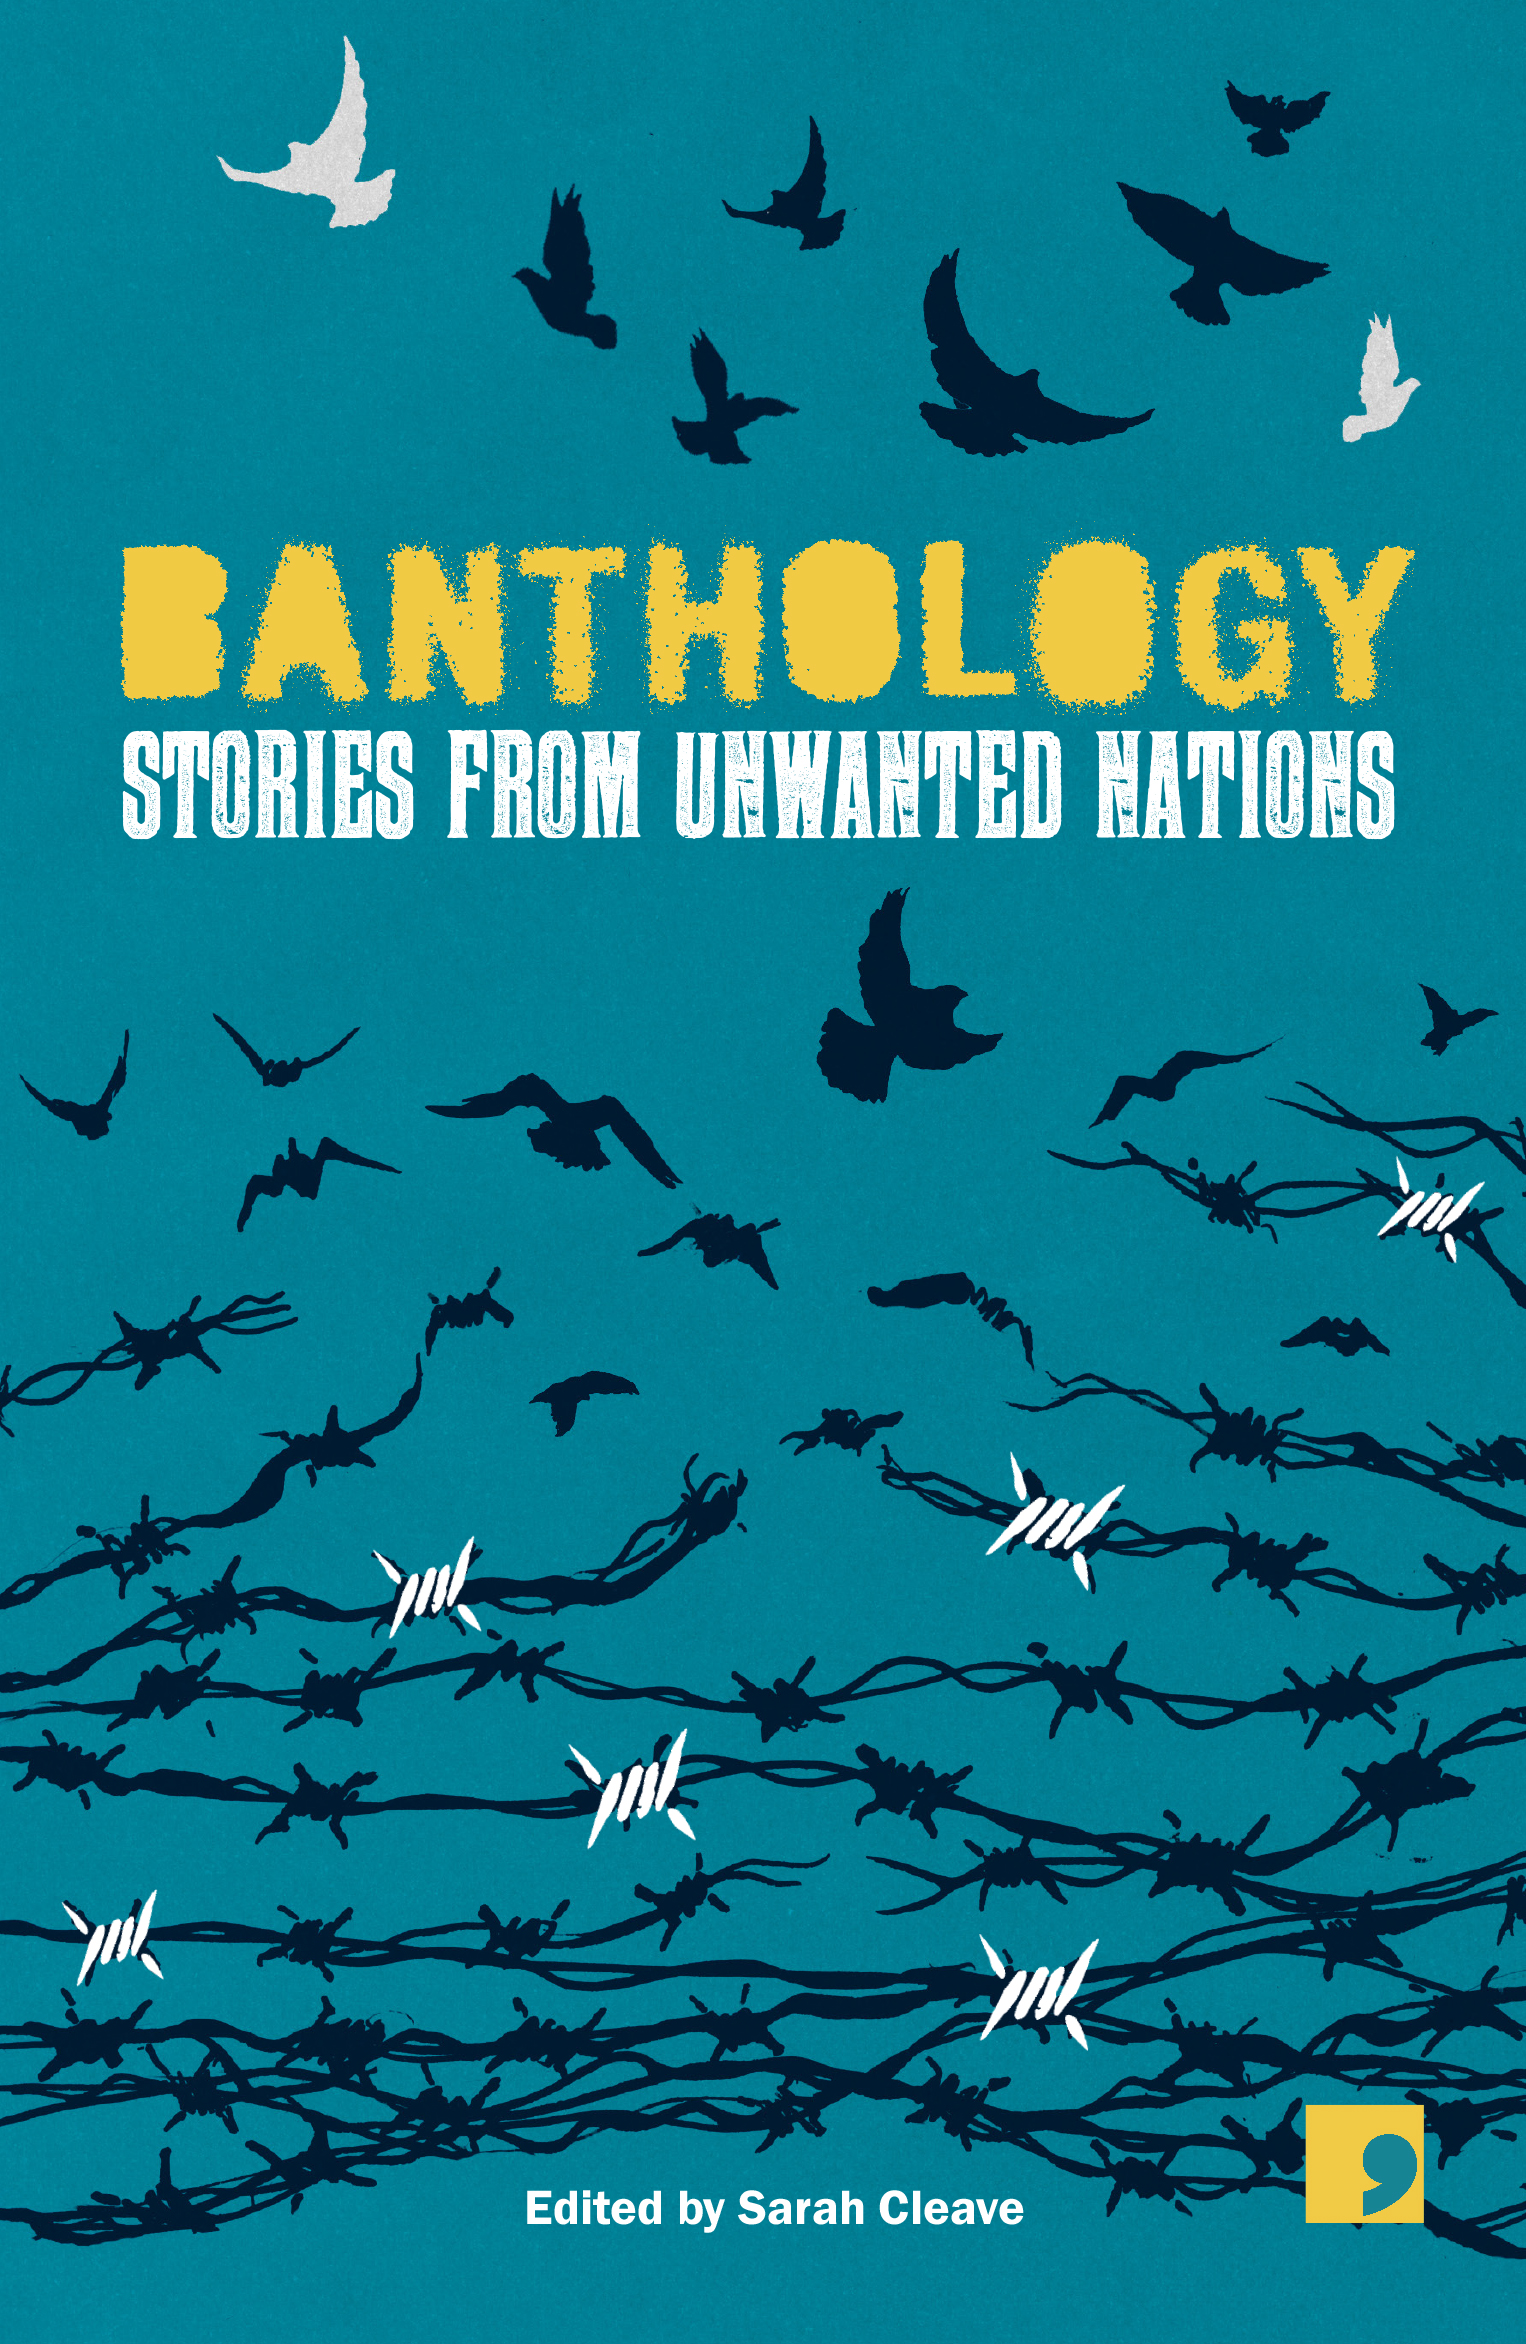  Banthology book cover